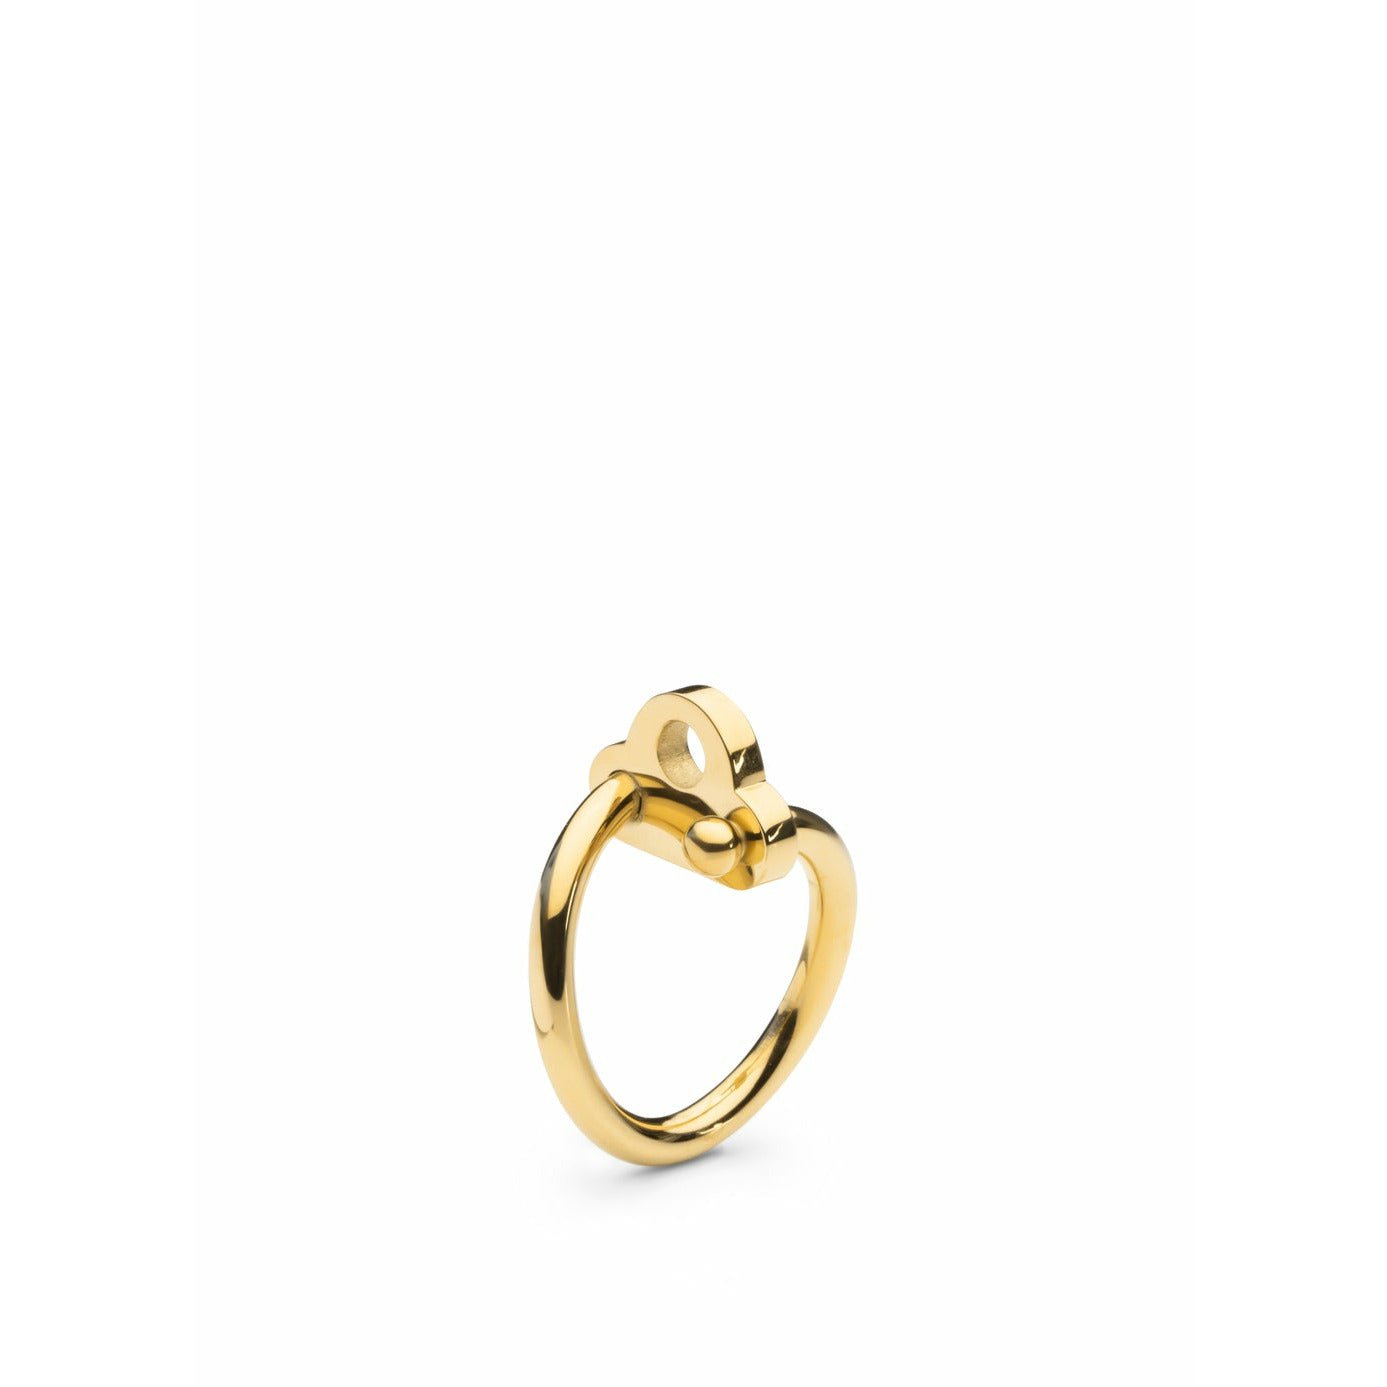 Skultuna Key Ring Small Gold chapado, Ø1,6 cm